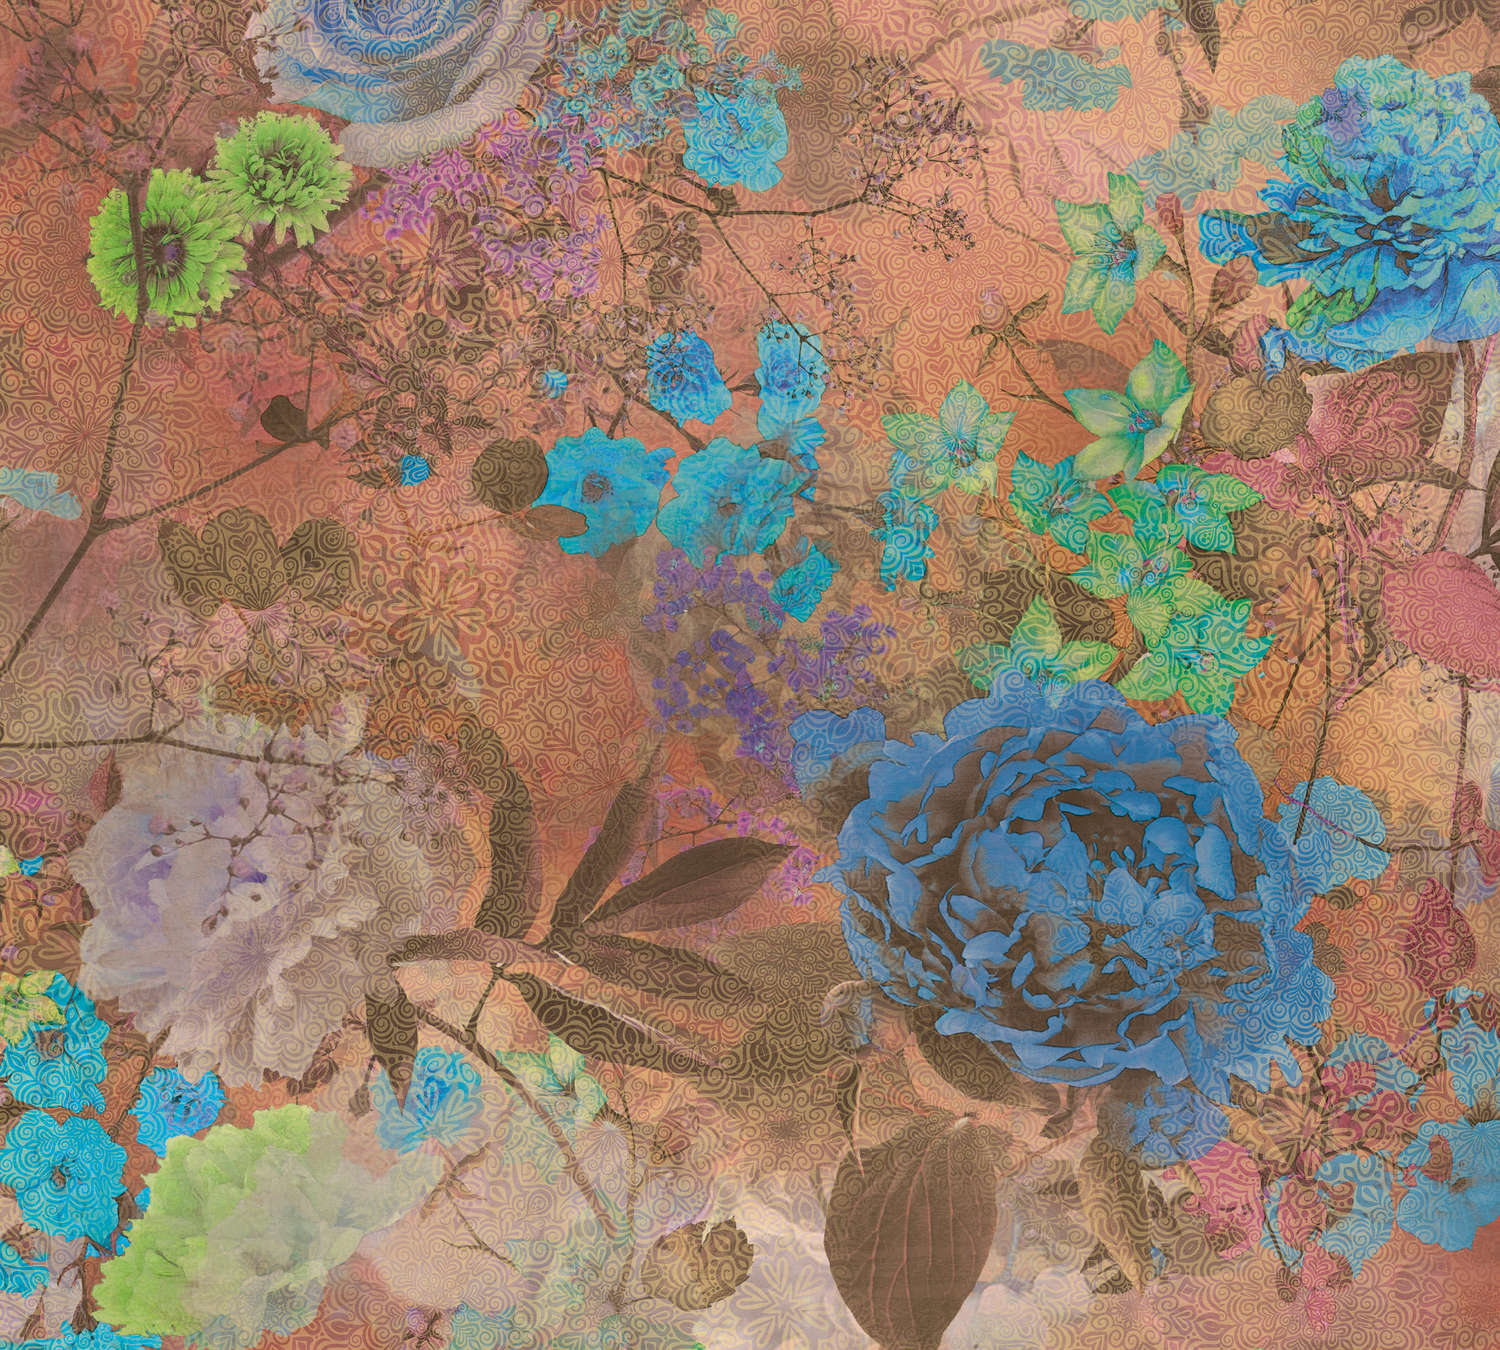             Bunte Fototapete Blüten & Ornamenten – Braun, Blau, Grün
        